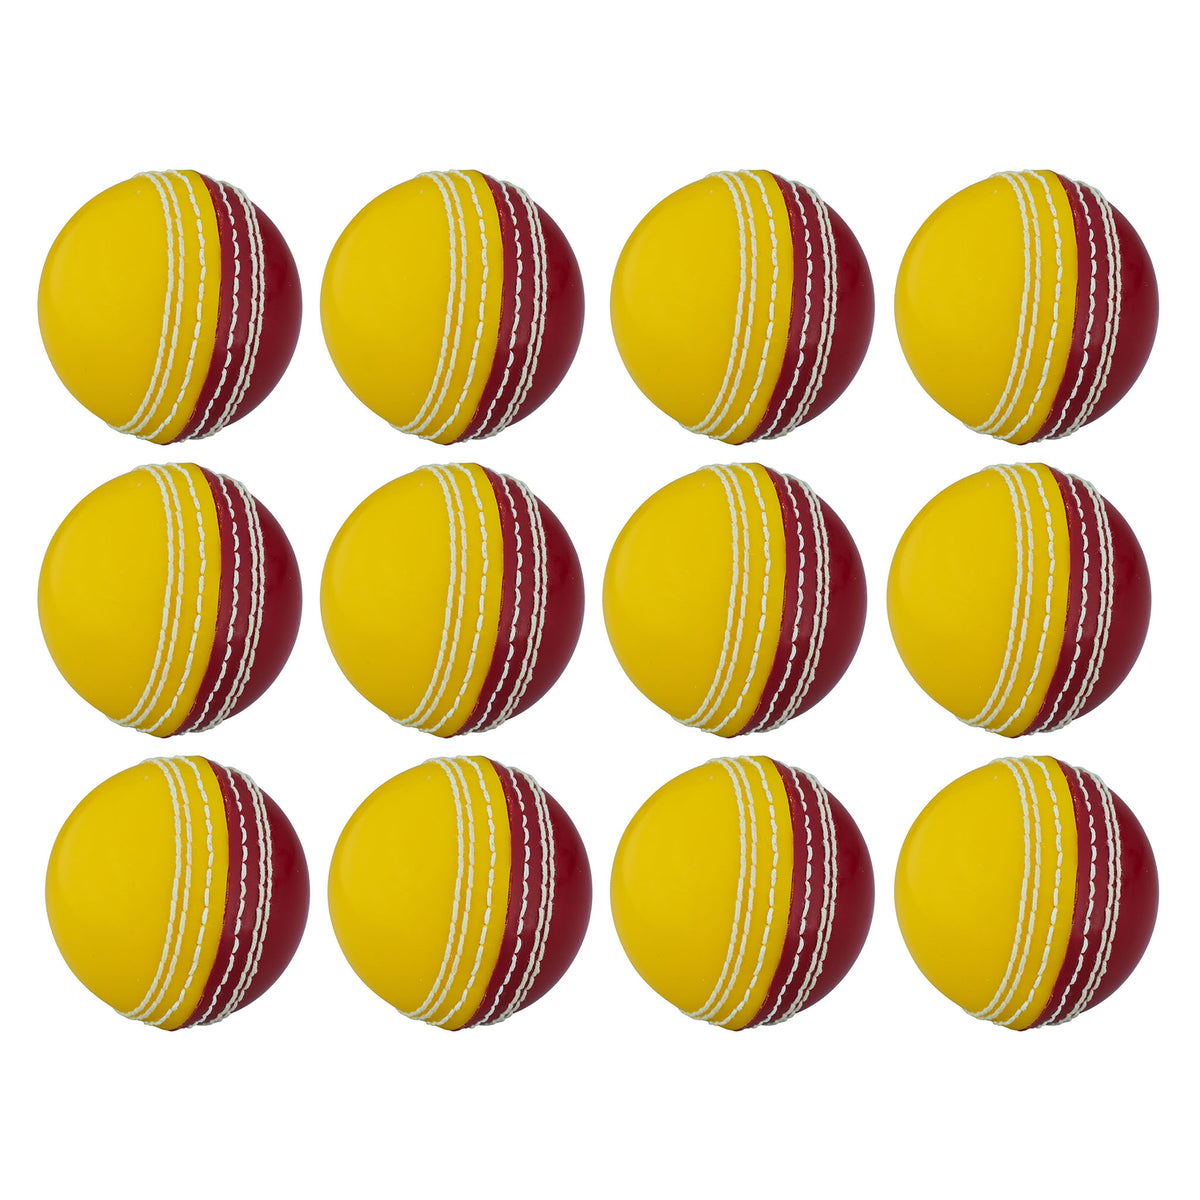 Readers Supaball Senior Cricket Ball Box of 12: Red/Yellow